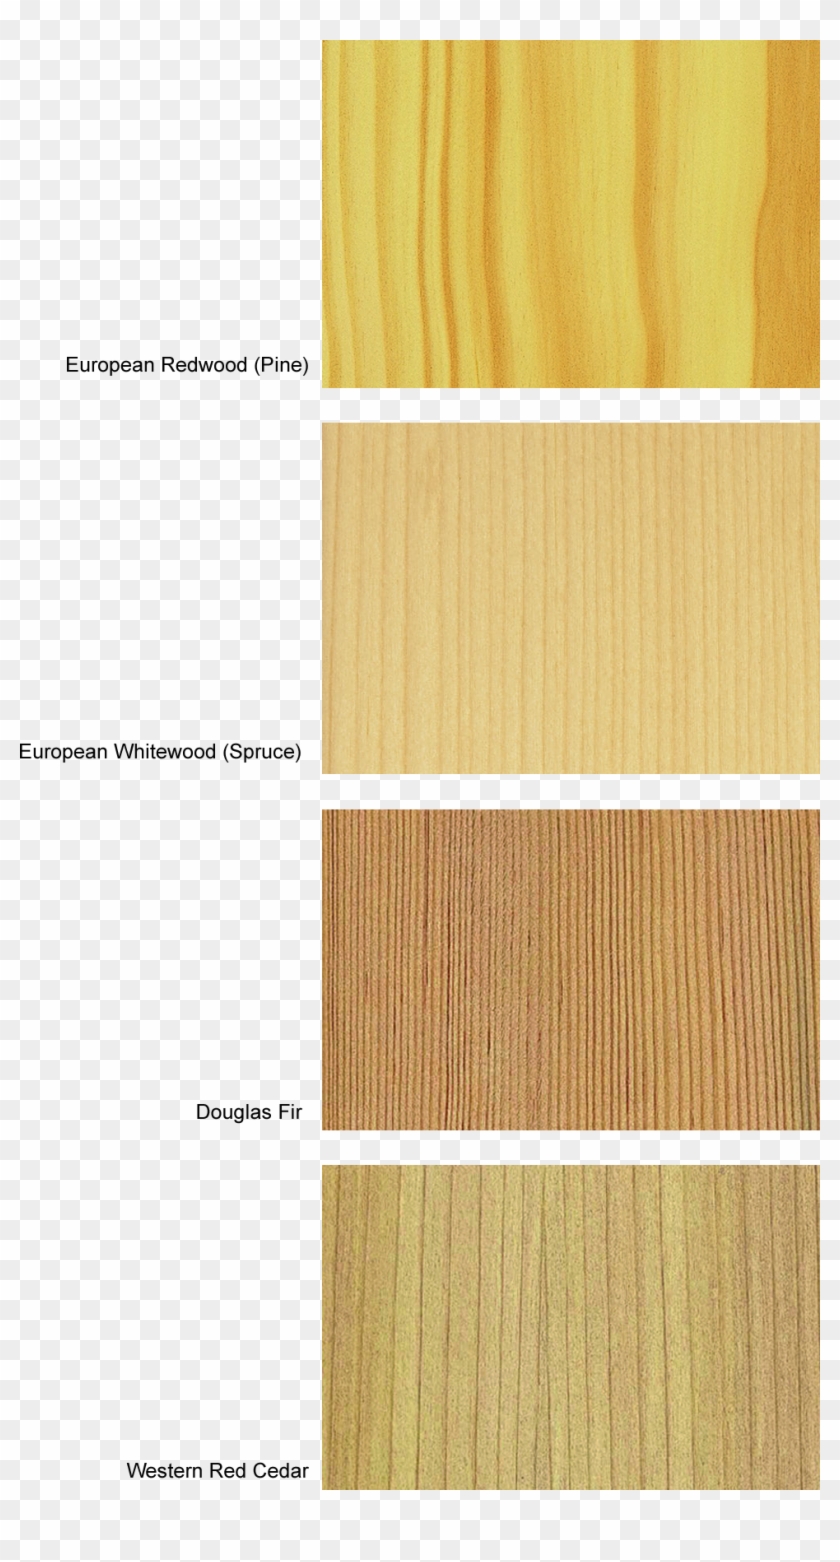 Timber Species Choosing Wood - European Redwood Clipart